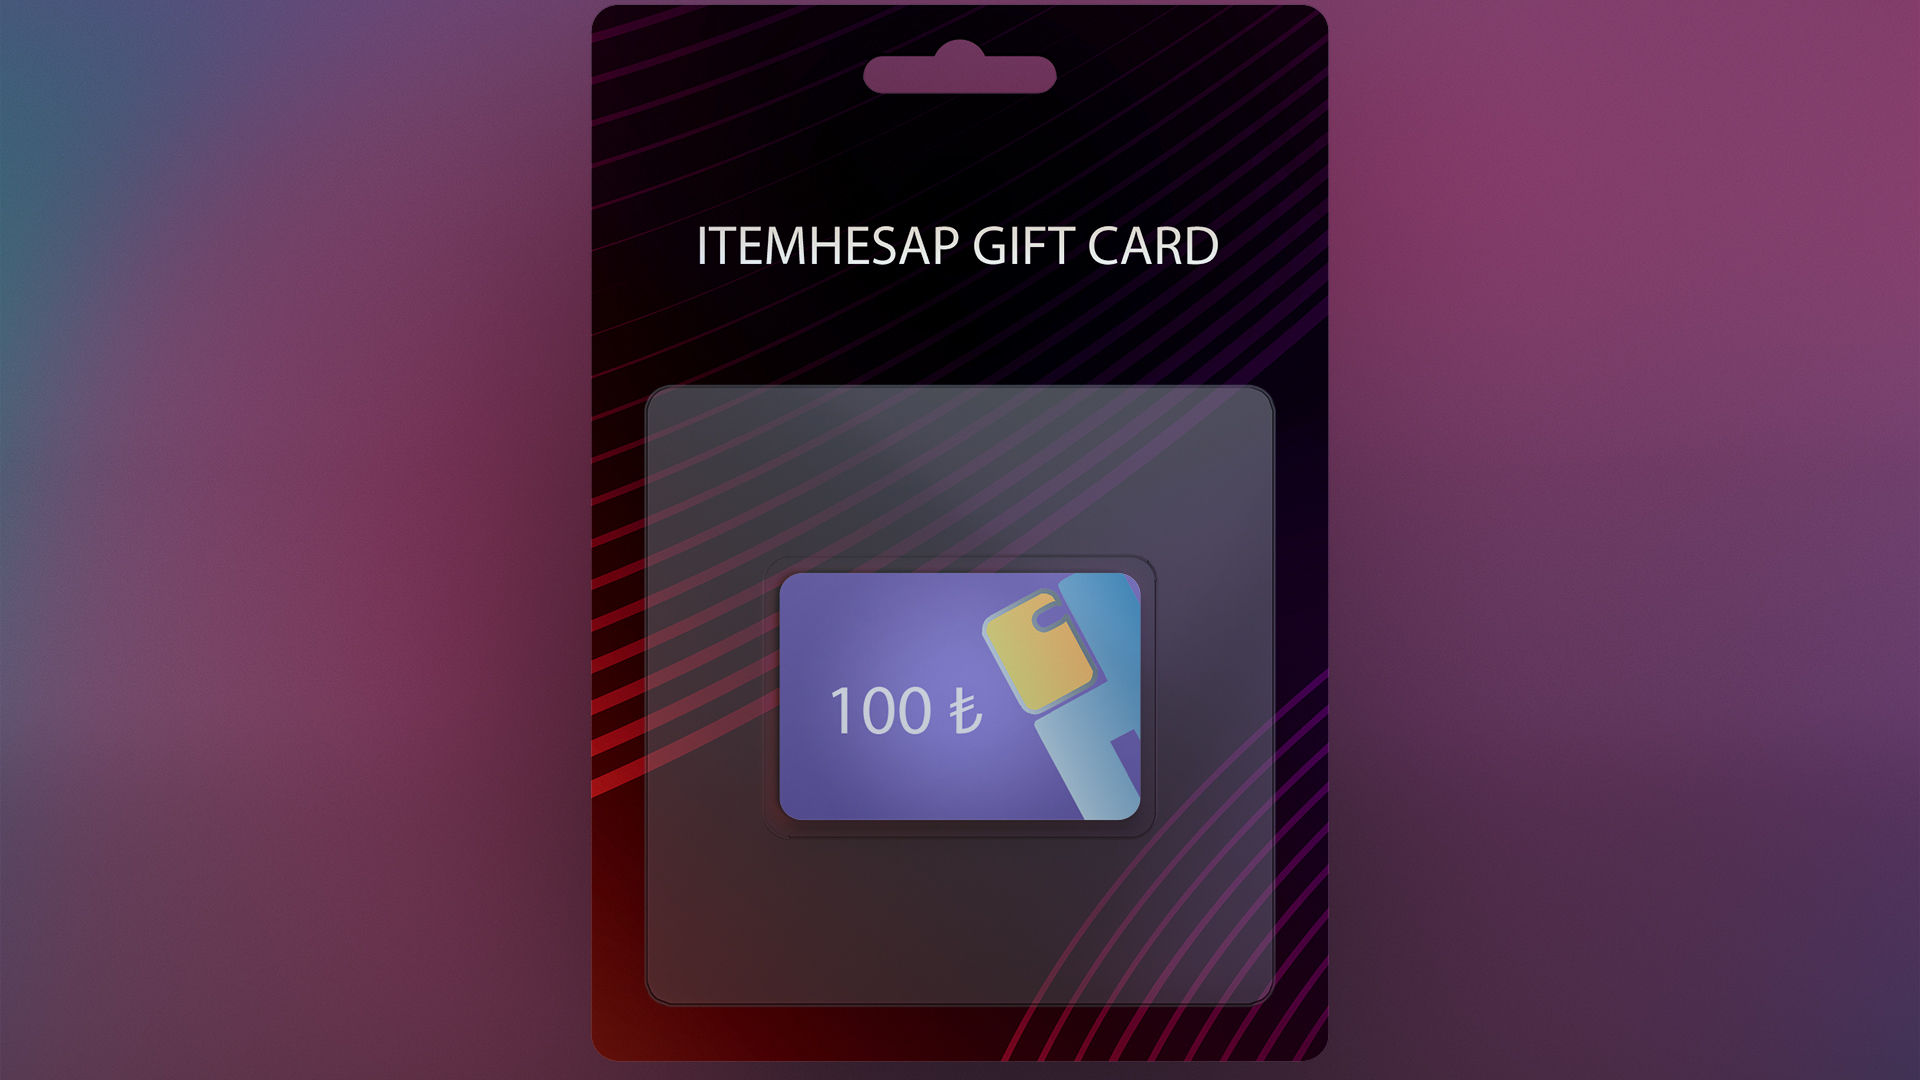 ItemHesap ₺100 Gift Card $6.7